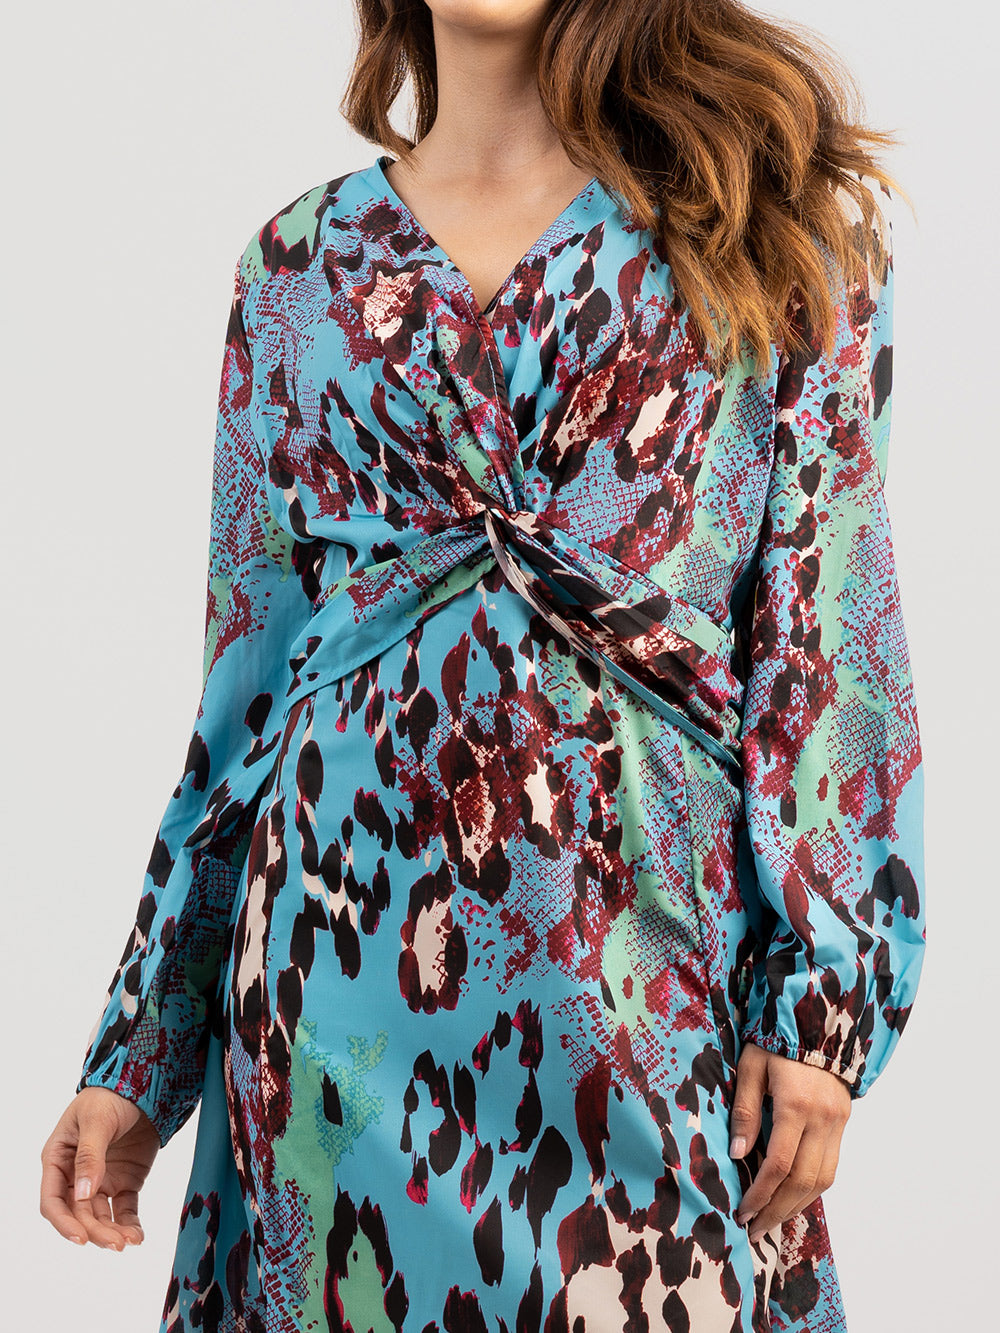 American Bling Plus Size Women Wrap Snake Print Dress - Montana West World